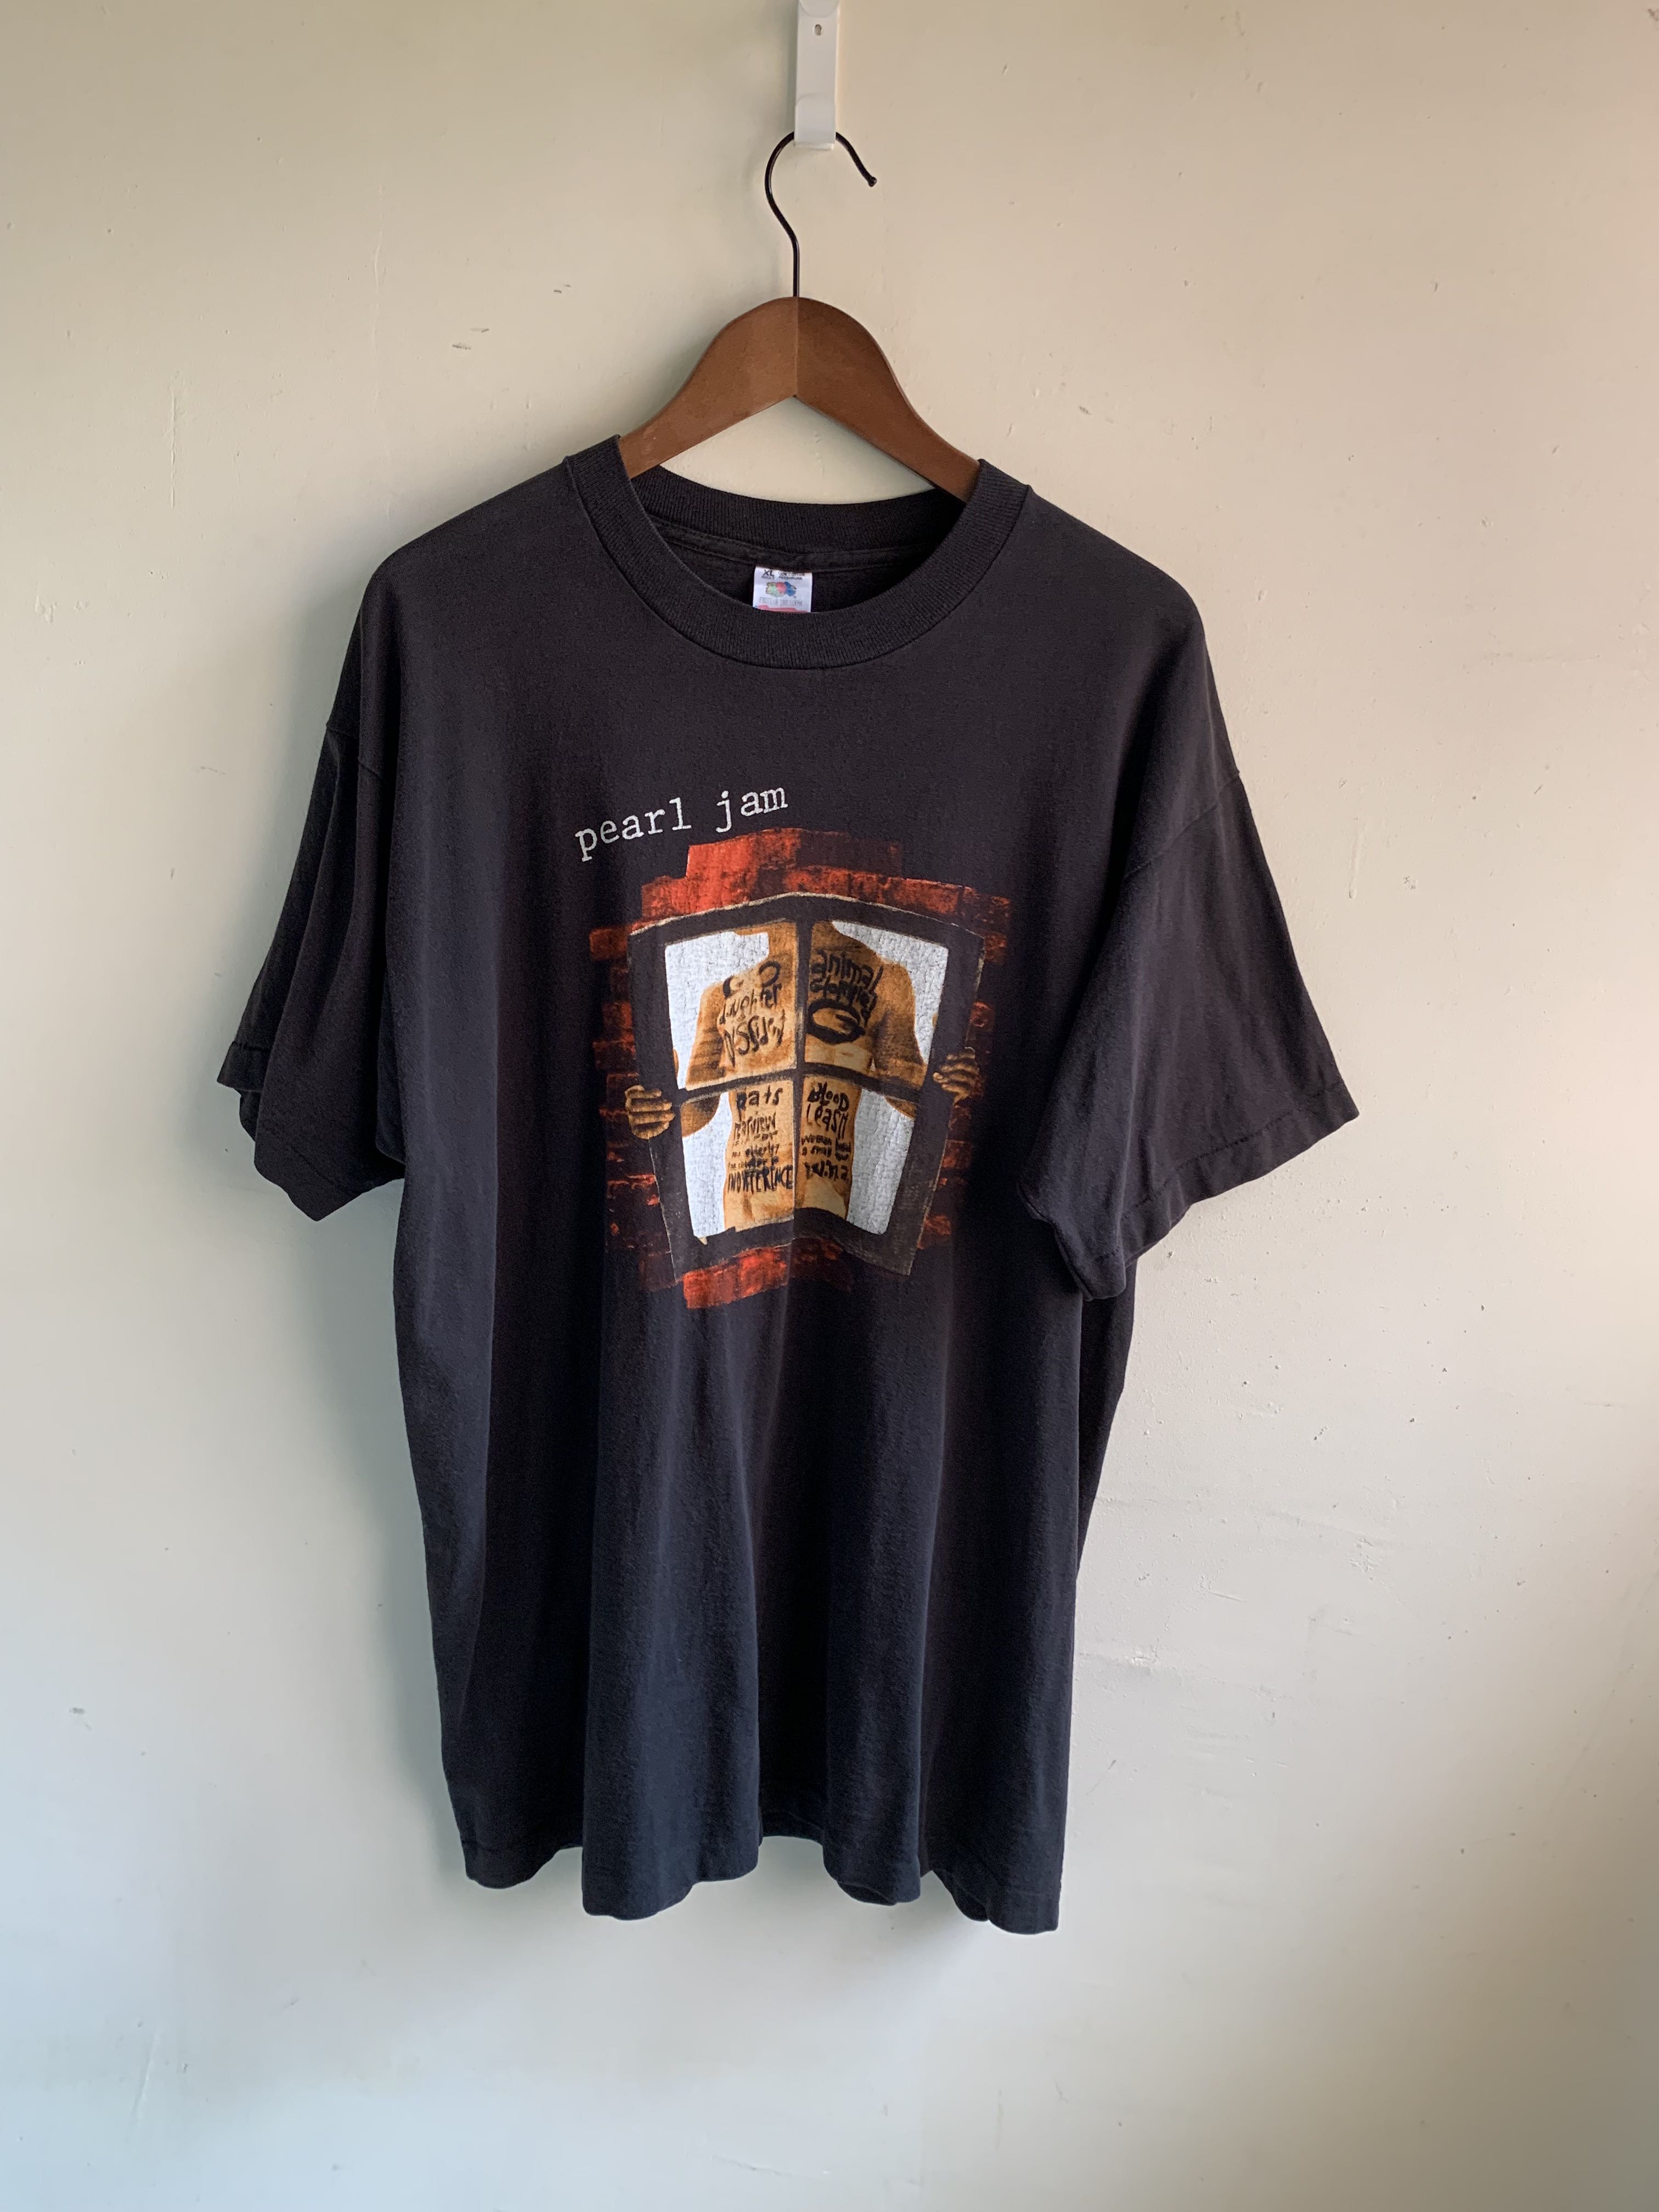 Vintage Rare Pearl Jam all over print shirt 90’s Grunge Rock Metal Nirvana